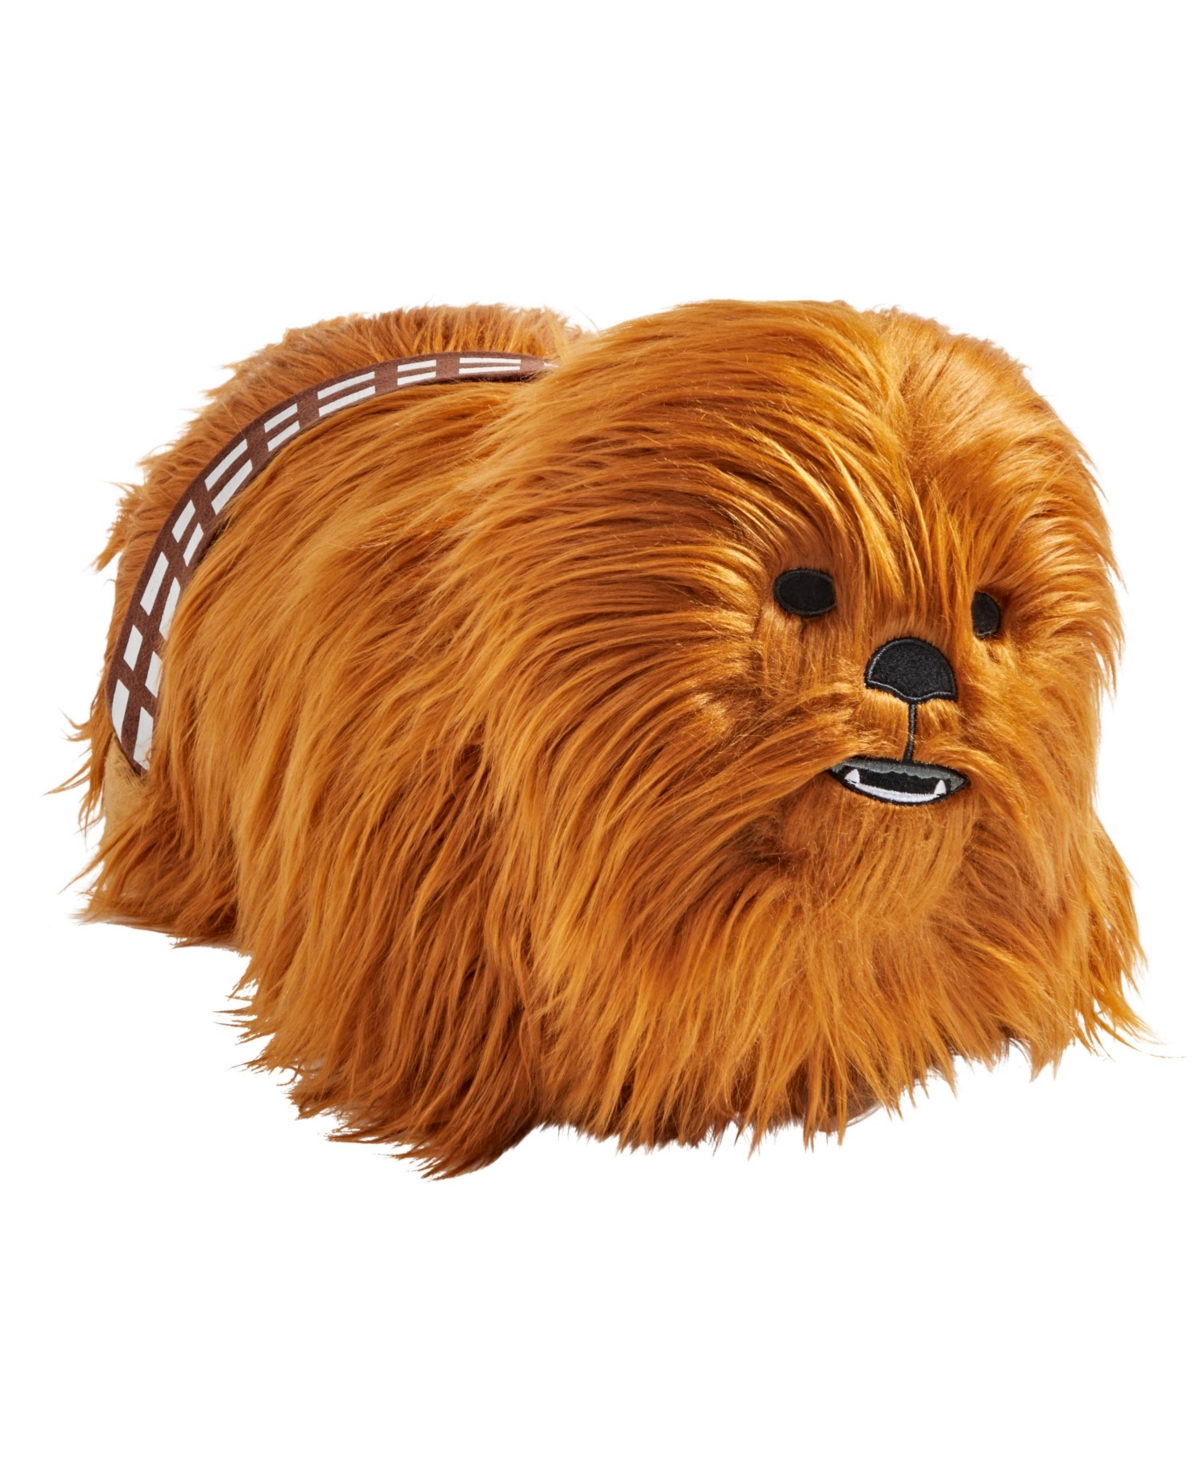 Pillow Pets Disney Star Wars Chewbacca Stuffed Animal Plush Toy In Brown